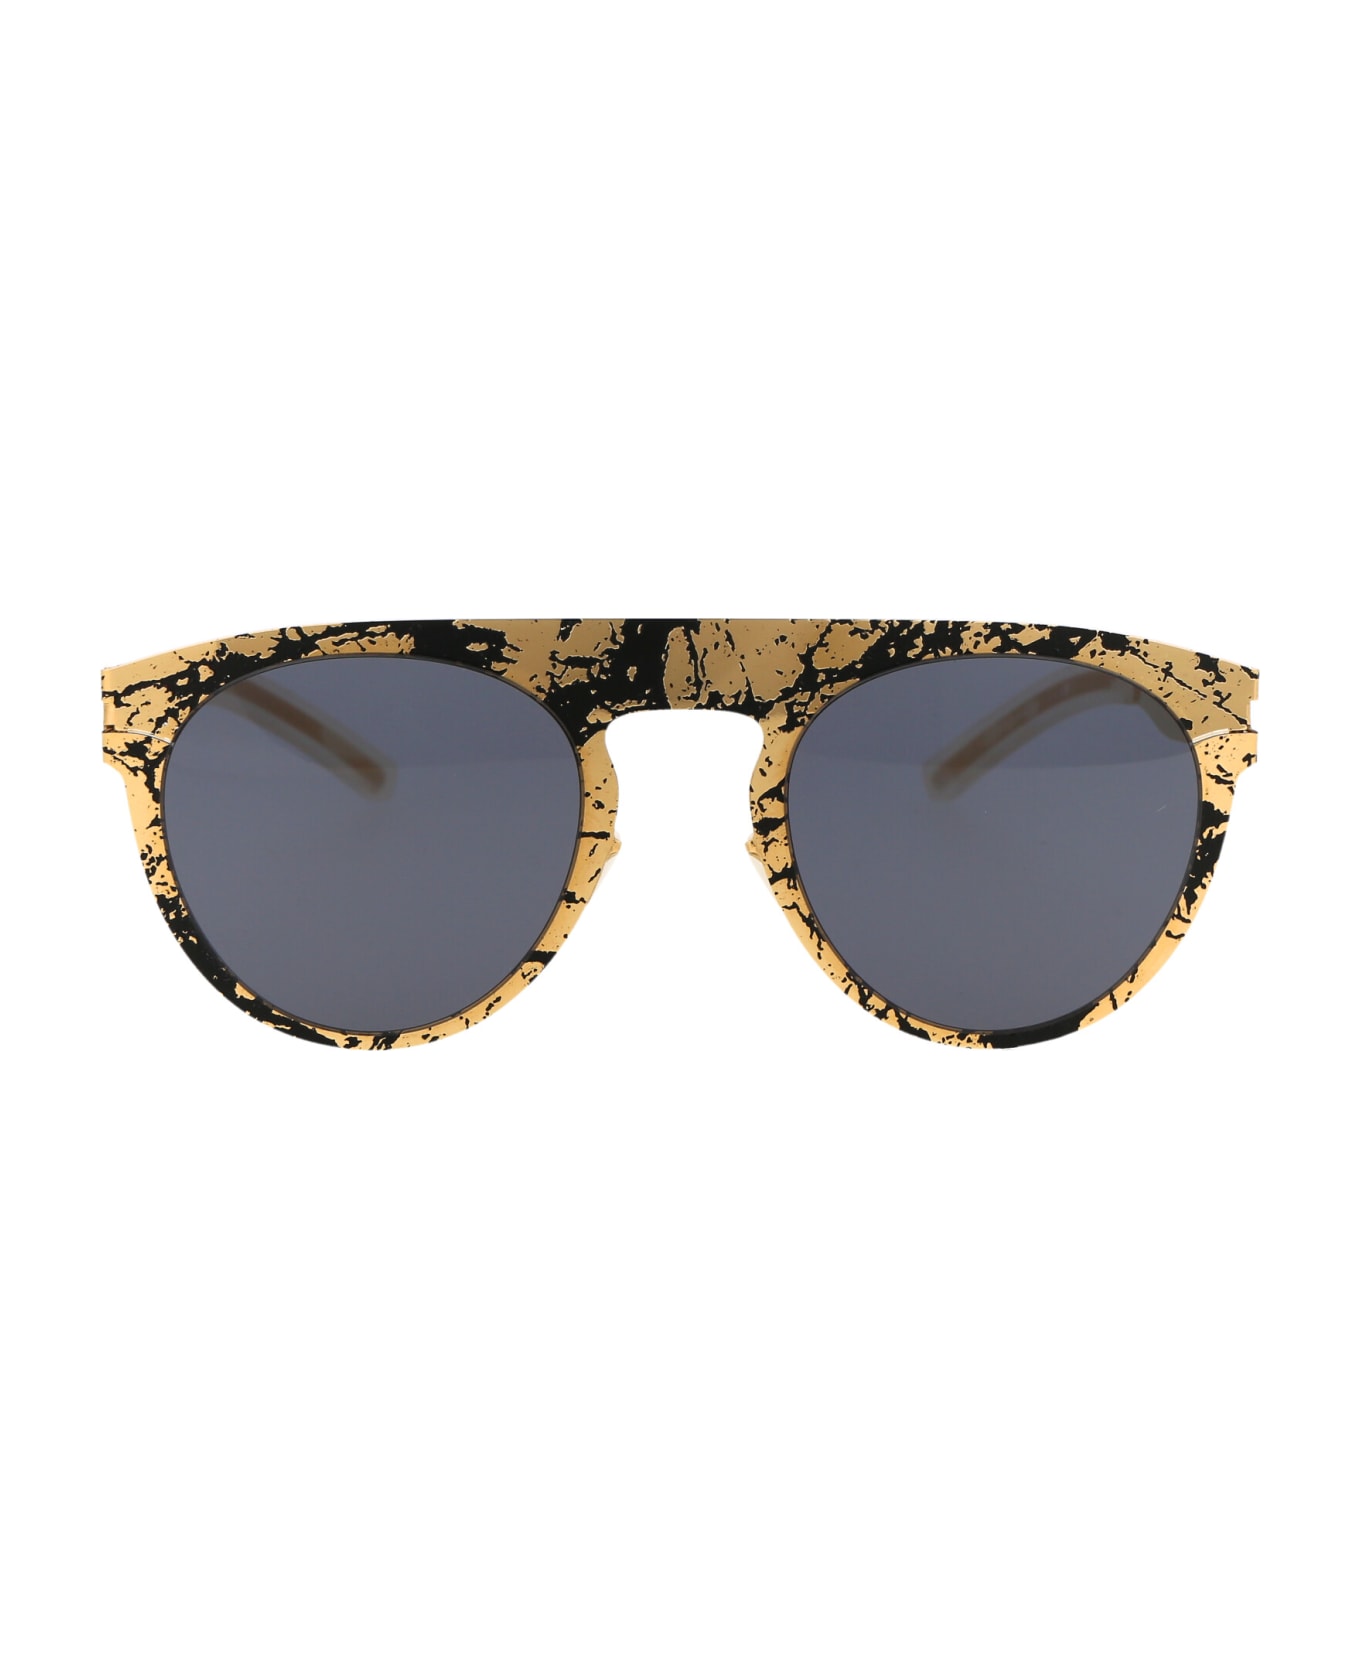 Mykita Mmtransfer004 Sunglasses - 267 GOLD BLACK STONE DARKGREY SOLID サングラス